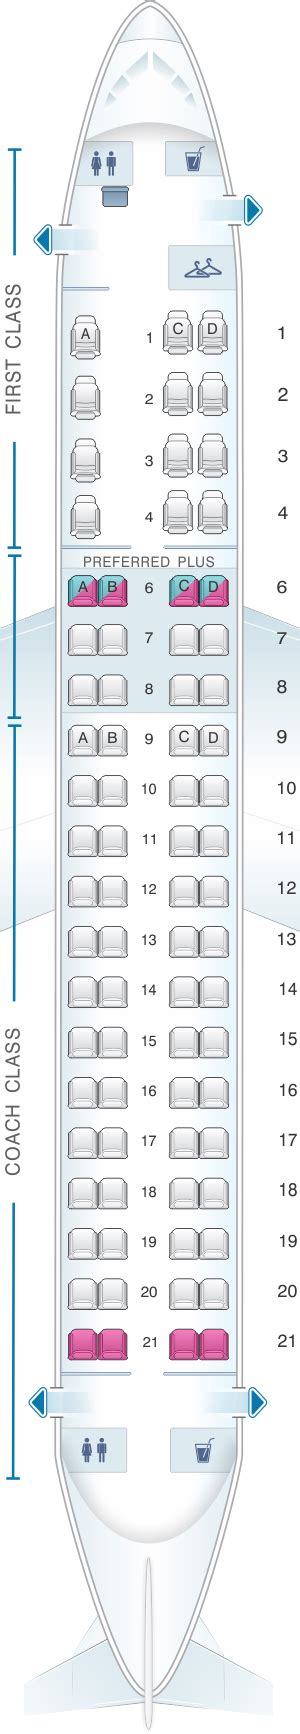 embraer 175 seating chart alaska